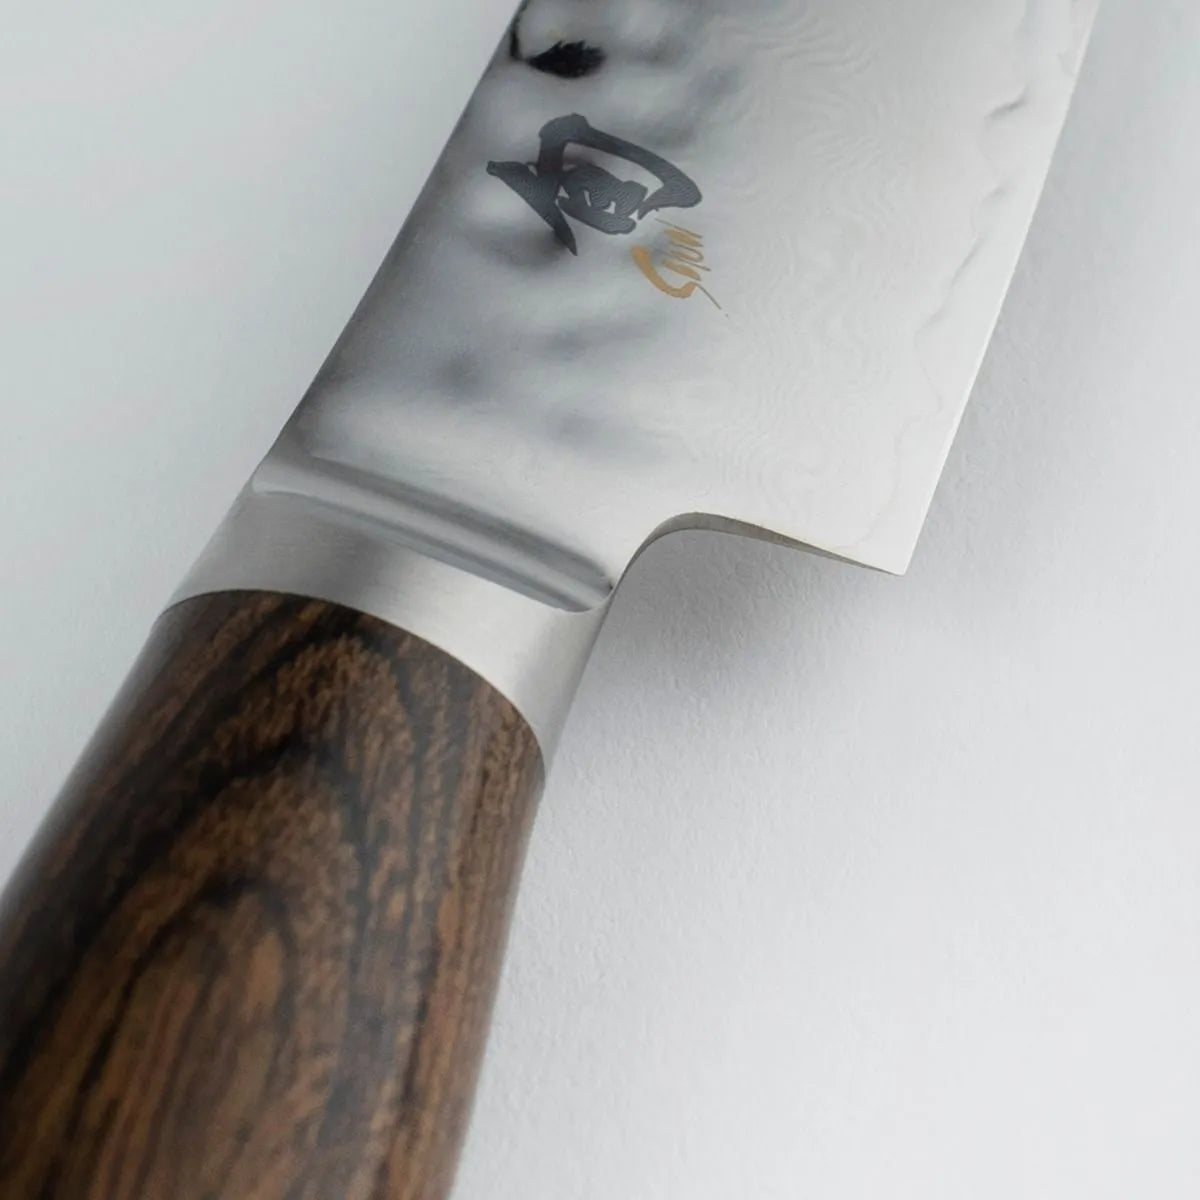 Kai Shun Premier Paring Kitchen Knife 4" with PakkaWood Handle VG-MAX Blade [TDM0700]